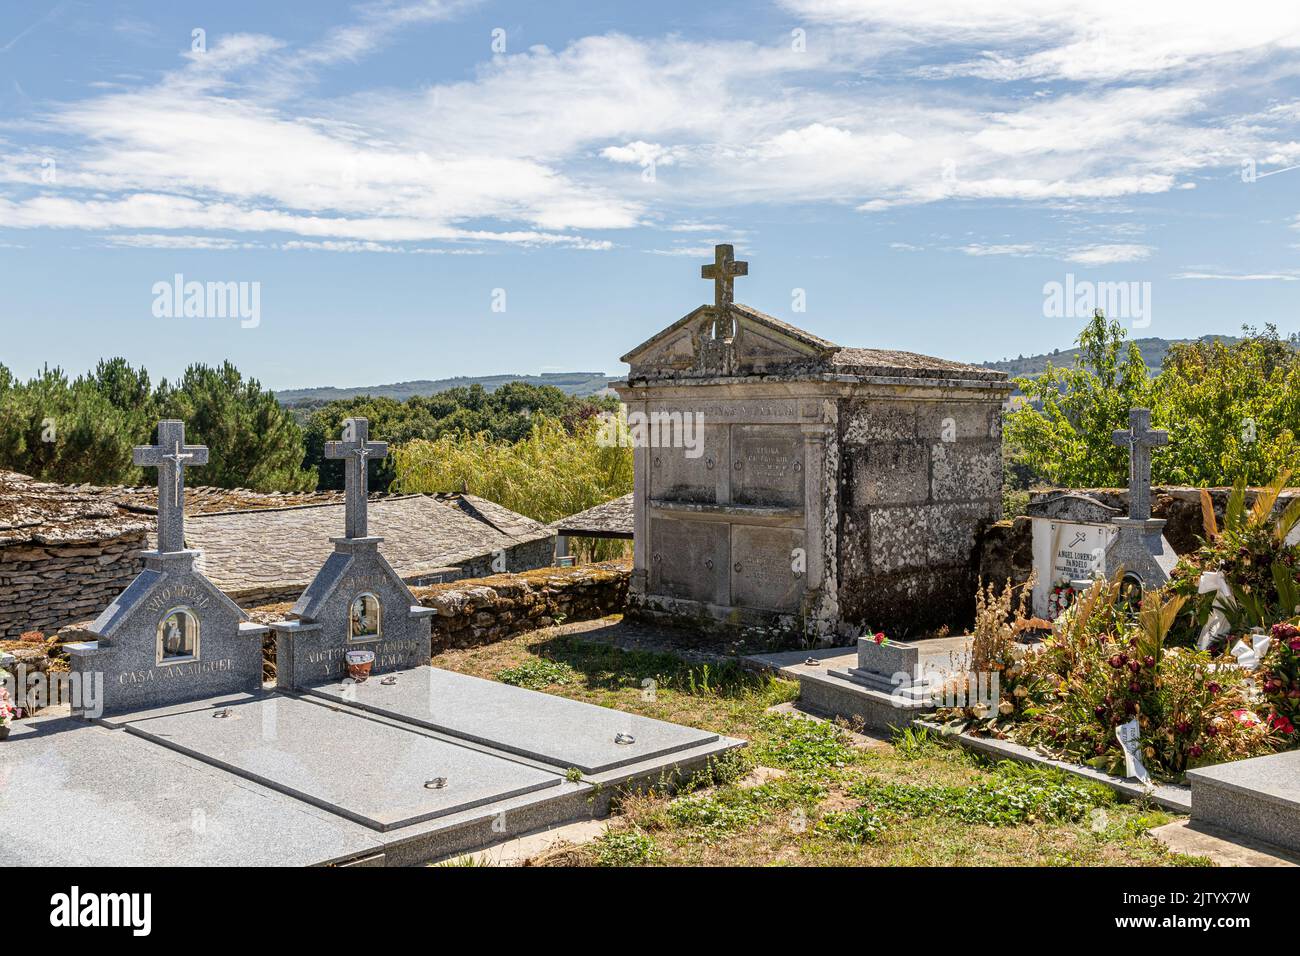 Boveda de Mera, Spain. The church graveyard or cemetery Stock Photo